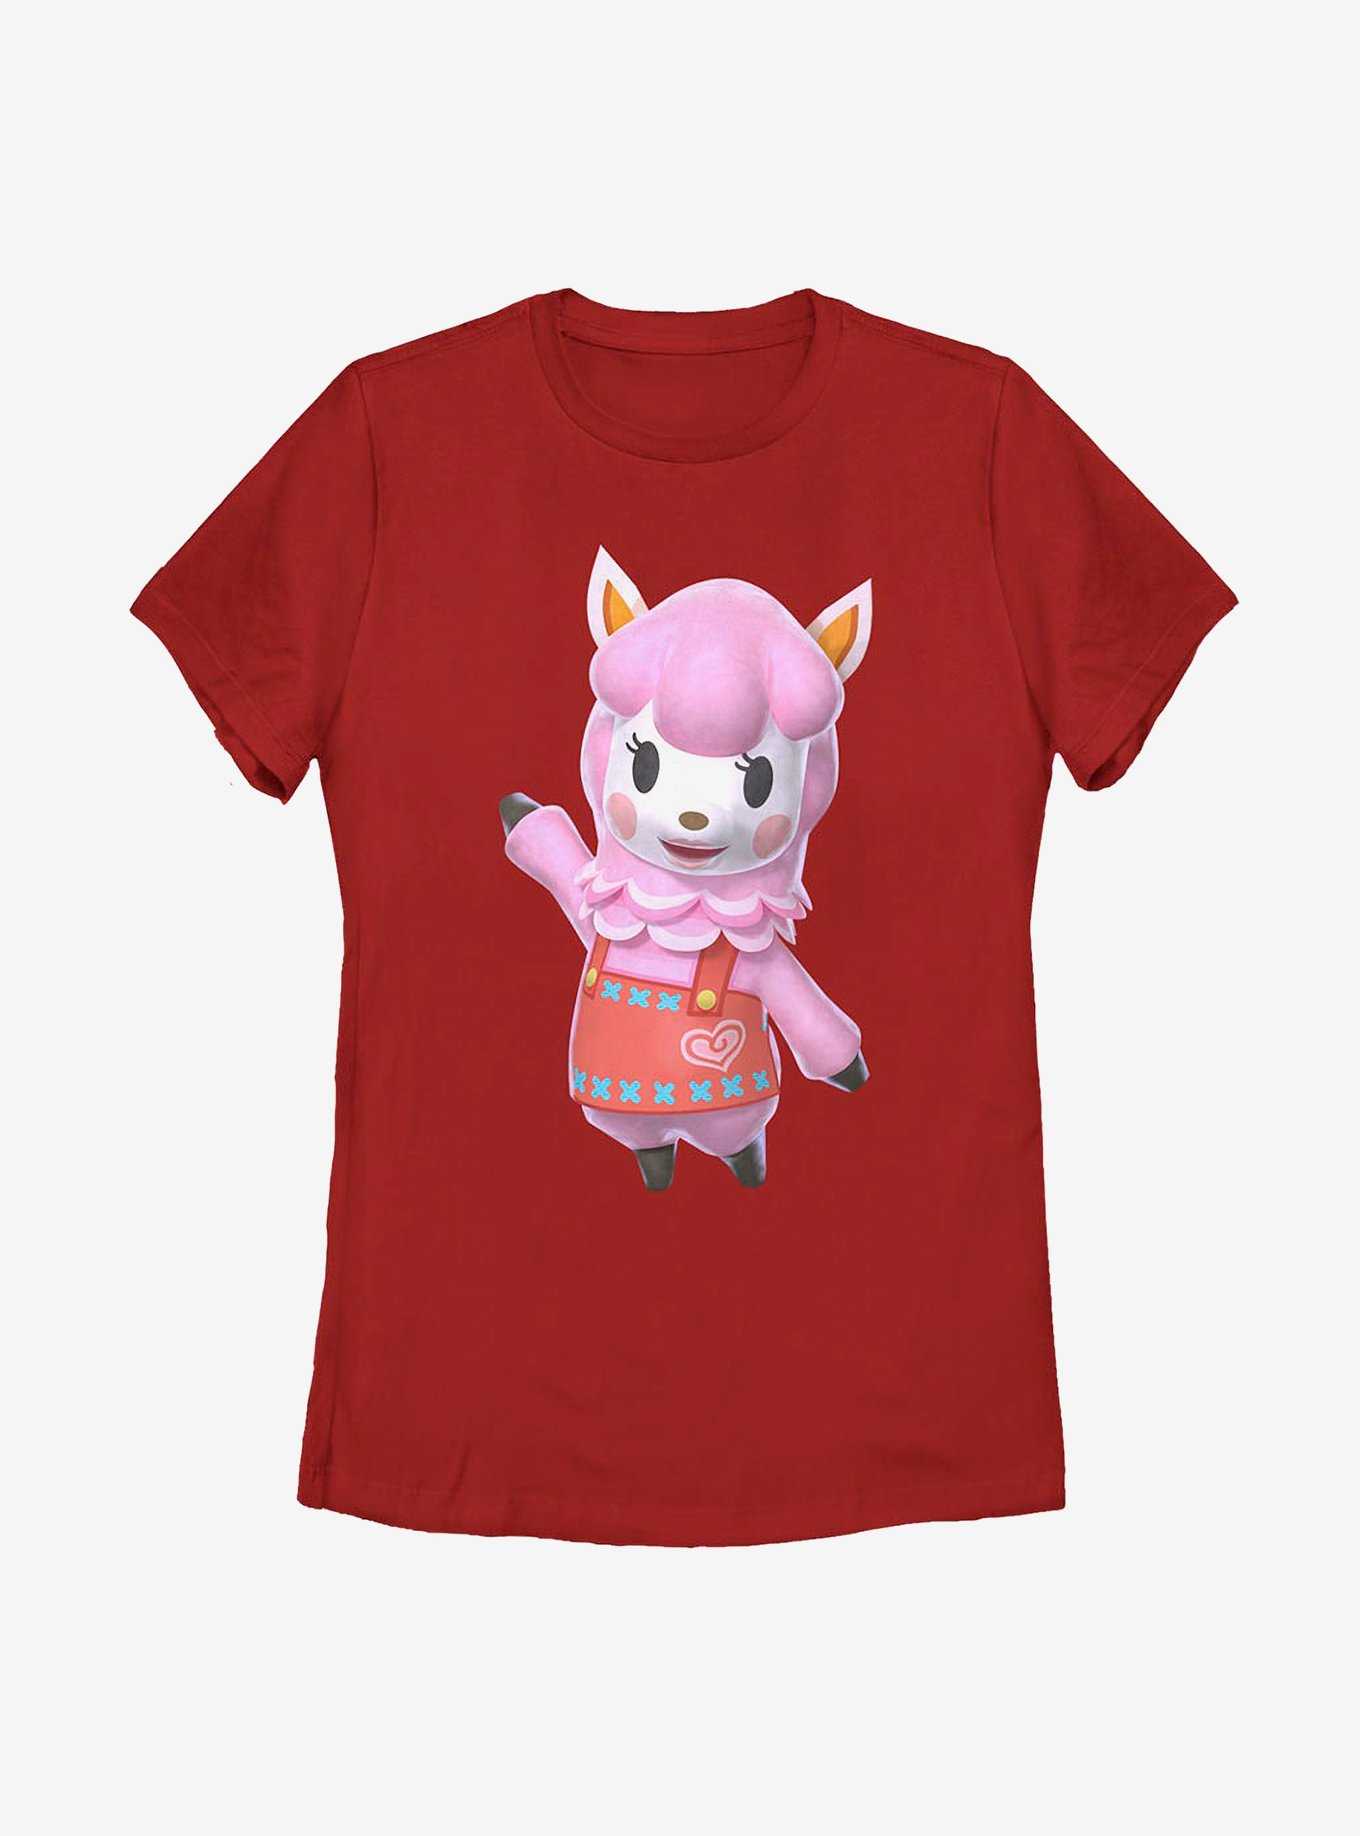 Nintendo Animal Crossing Reese Pose Womens T-Shirt, , hi-res